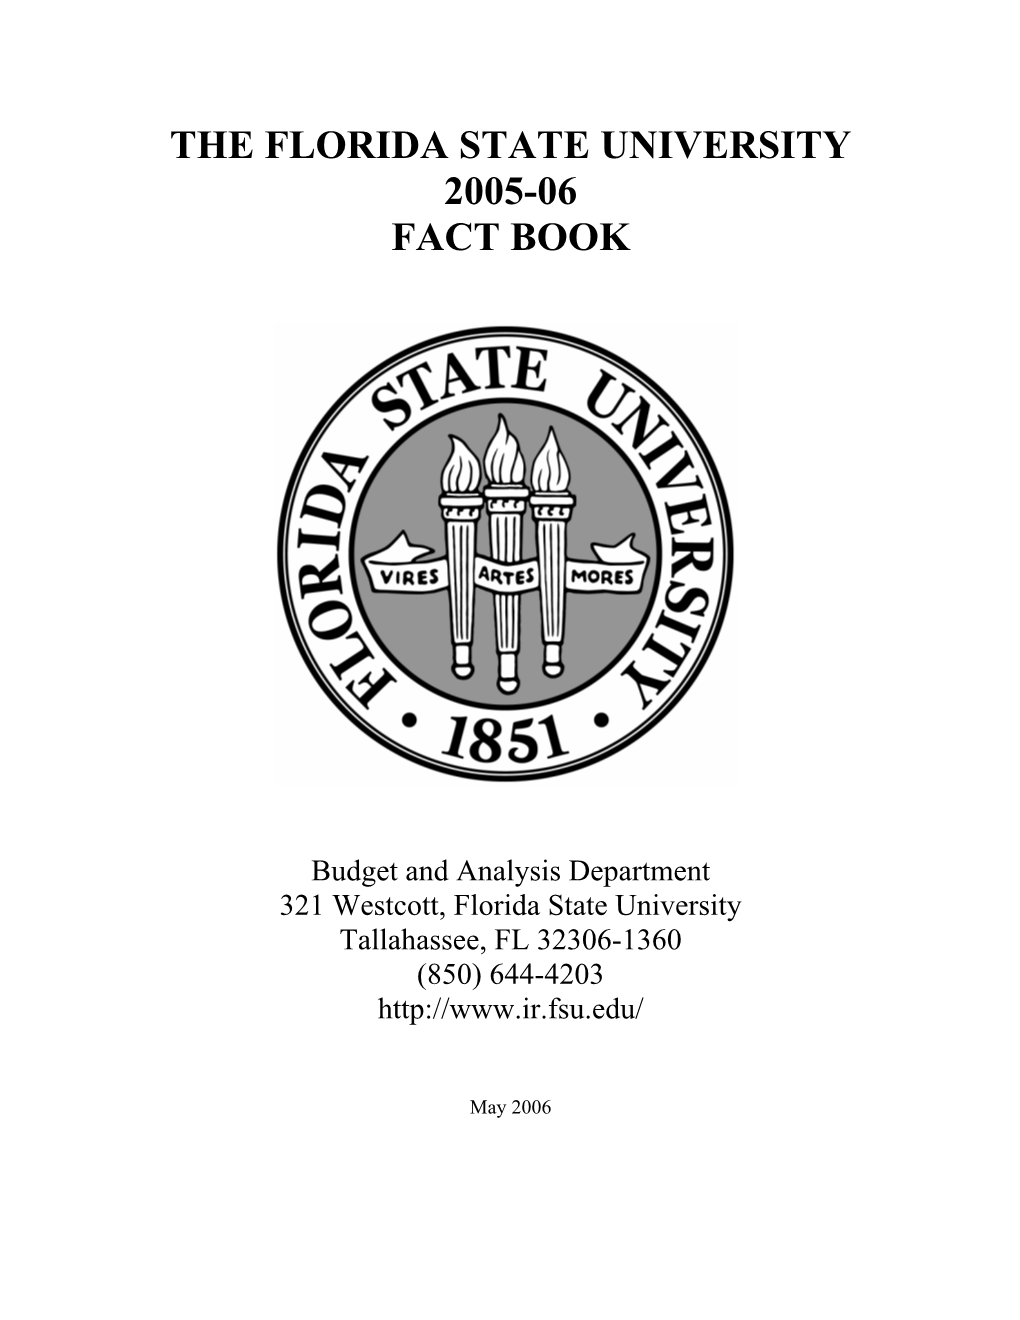 Florida State University 2005-06 Fact Book